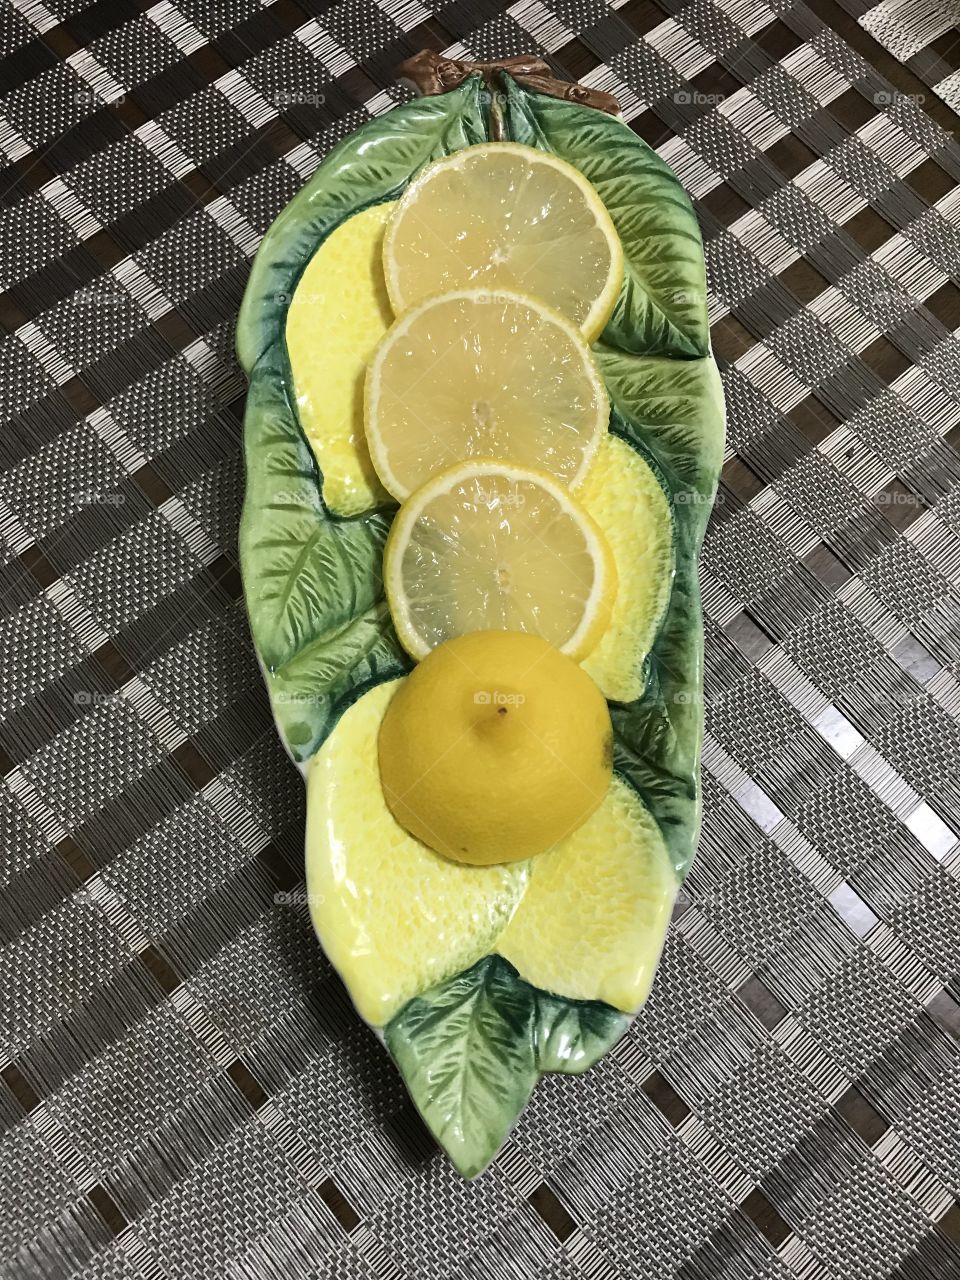 Lemon’s pieces on the plate